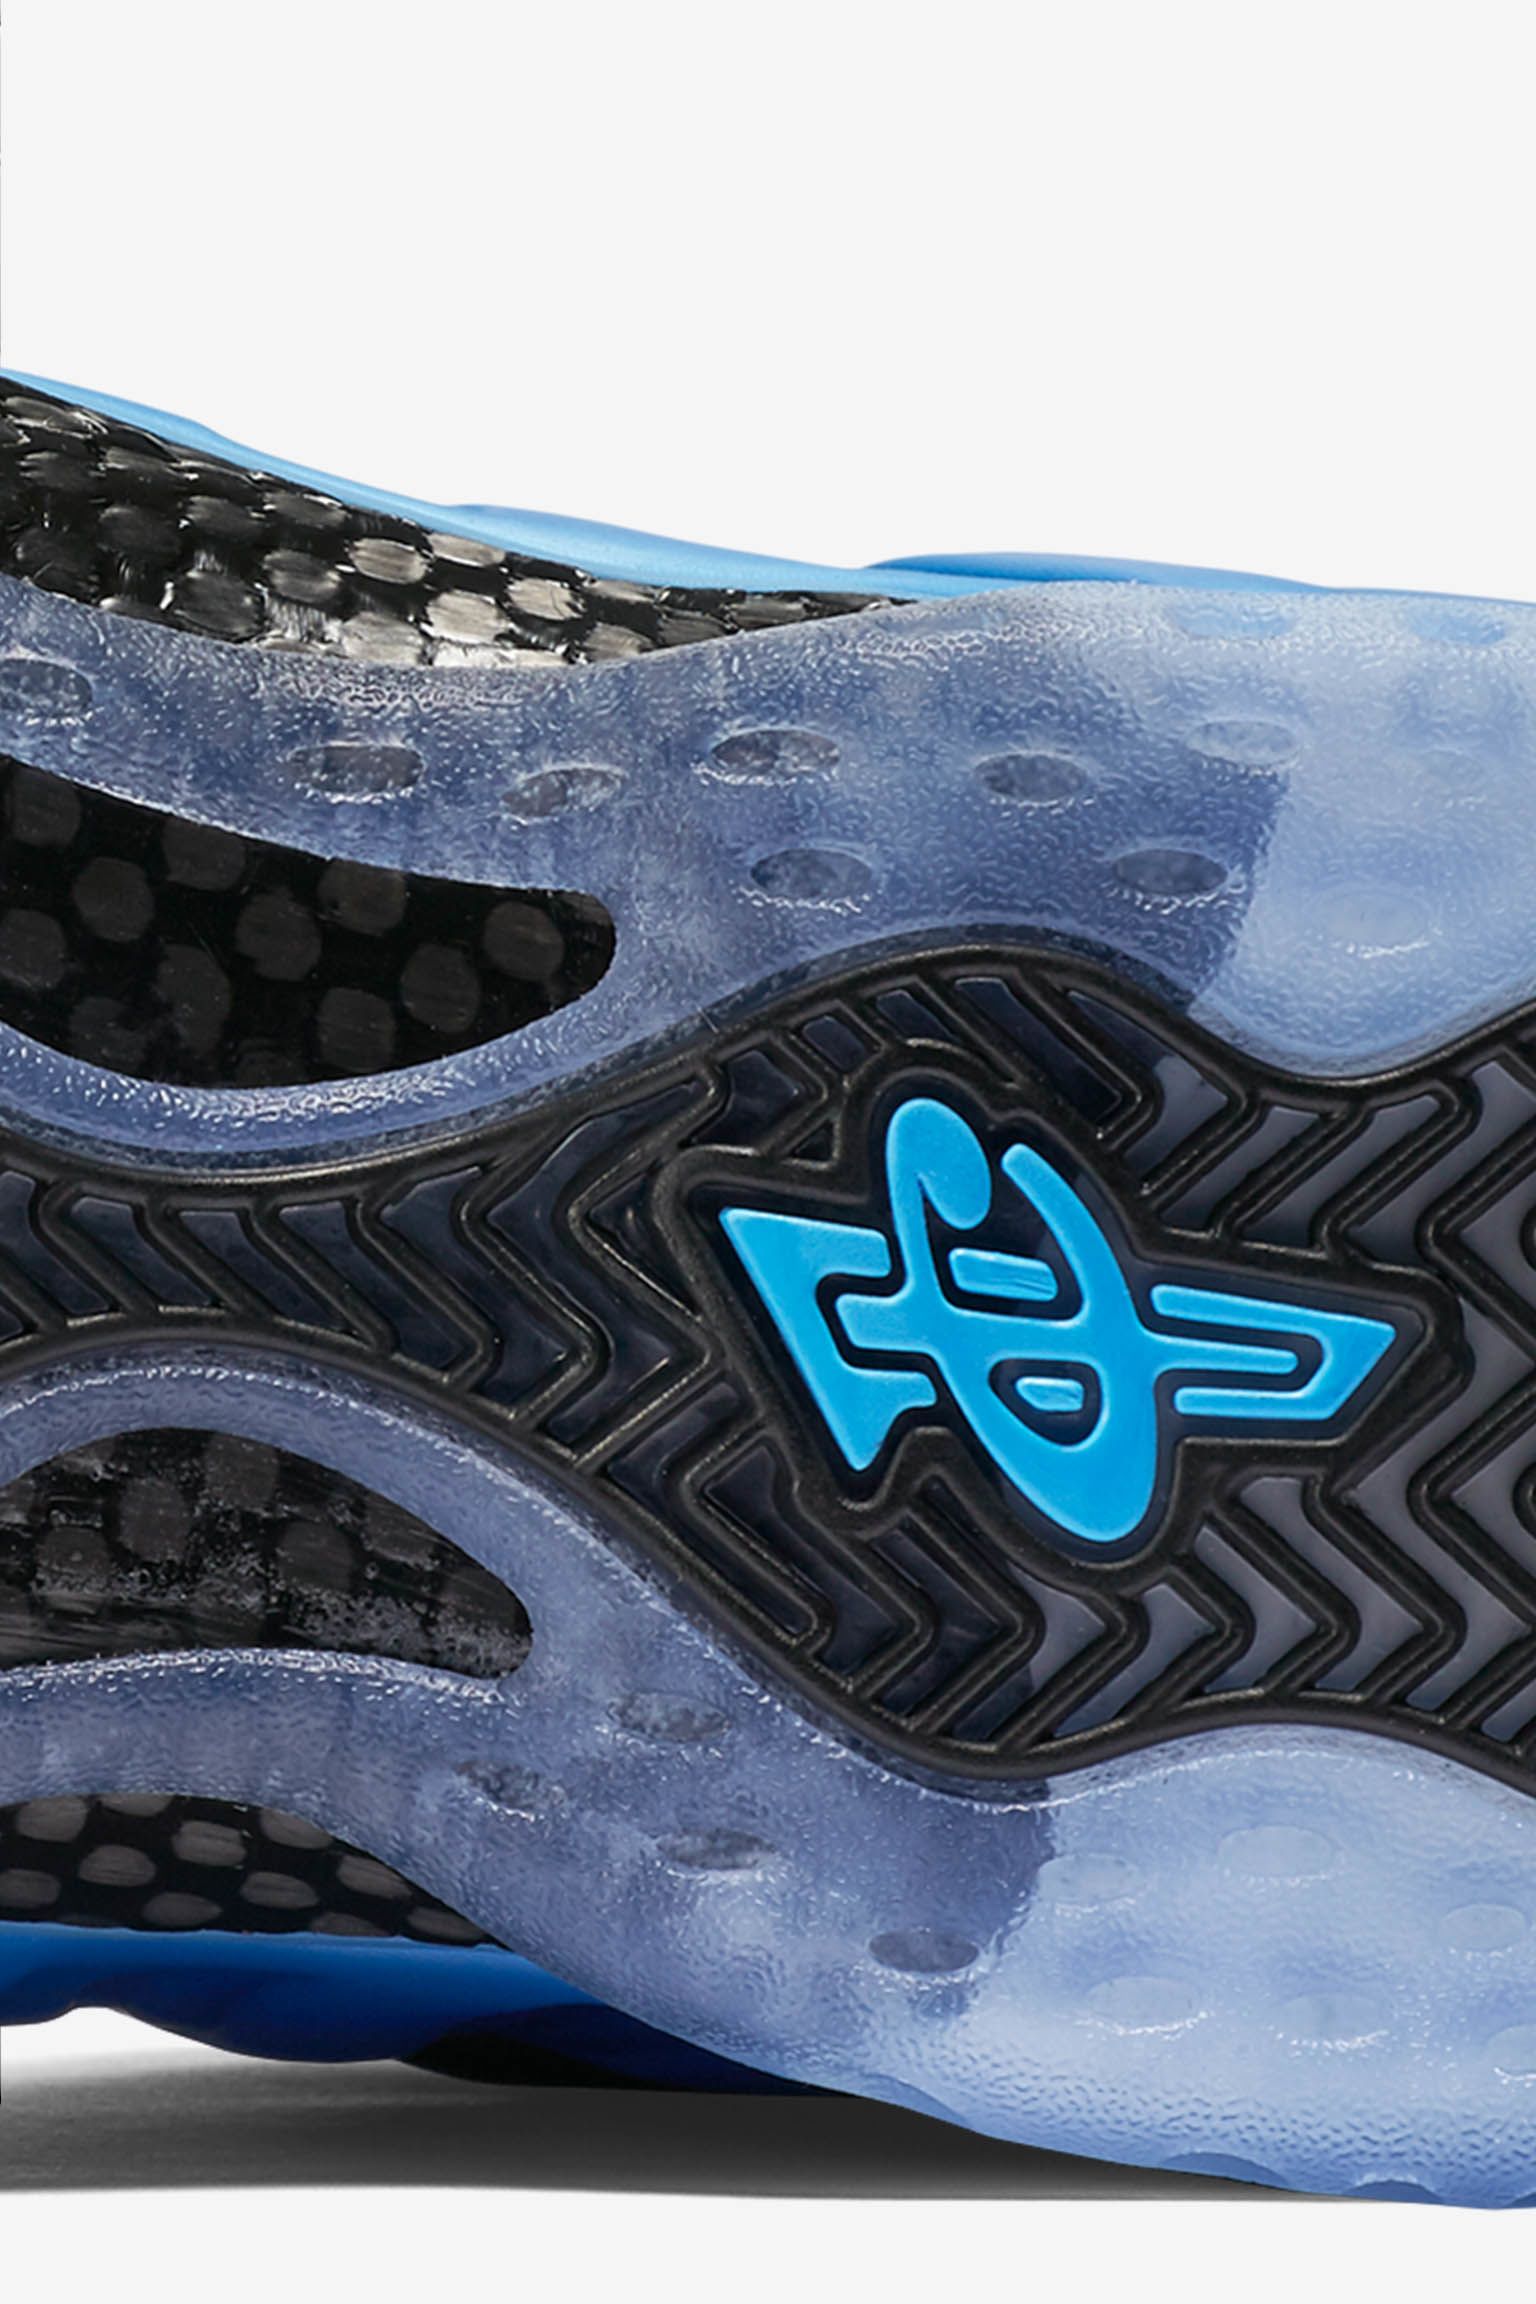 Nike Air Foamposite One 'University Blue' Release Date. Nike SNKRS